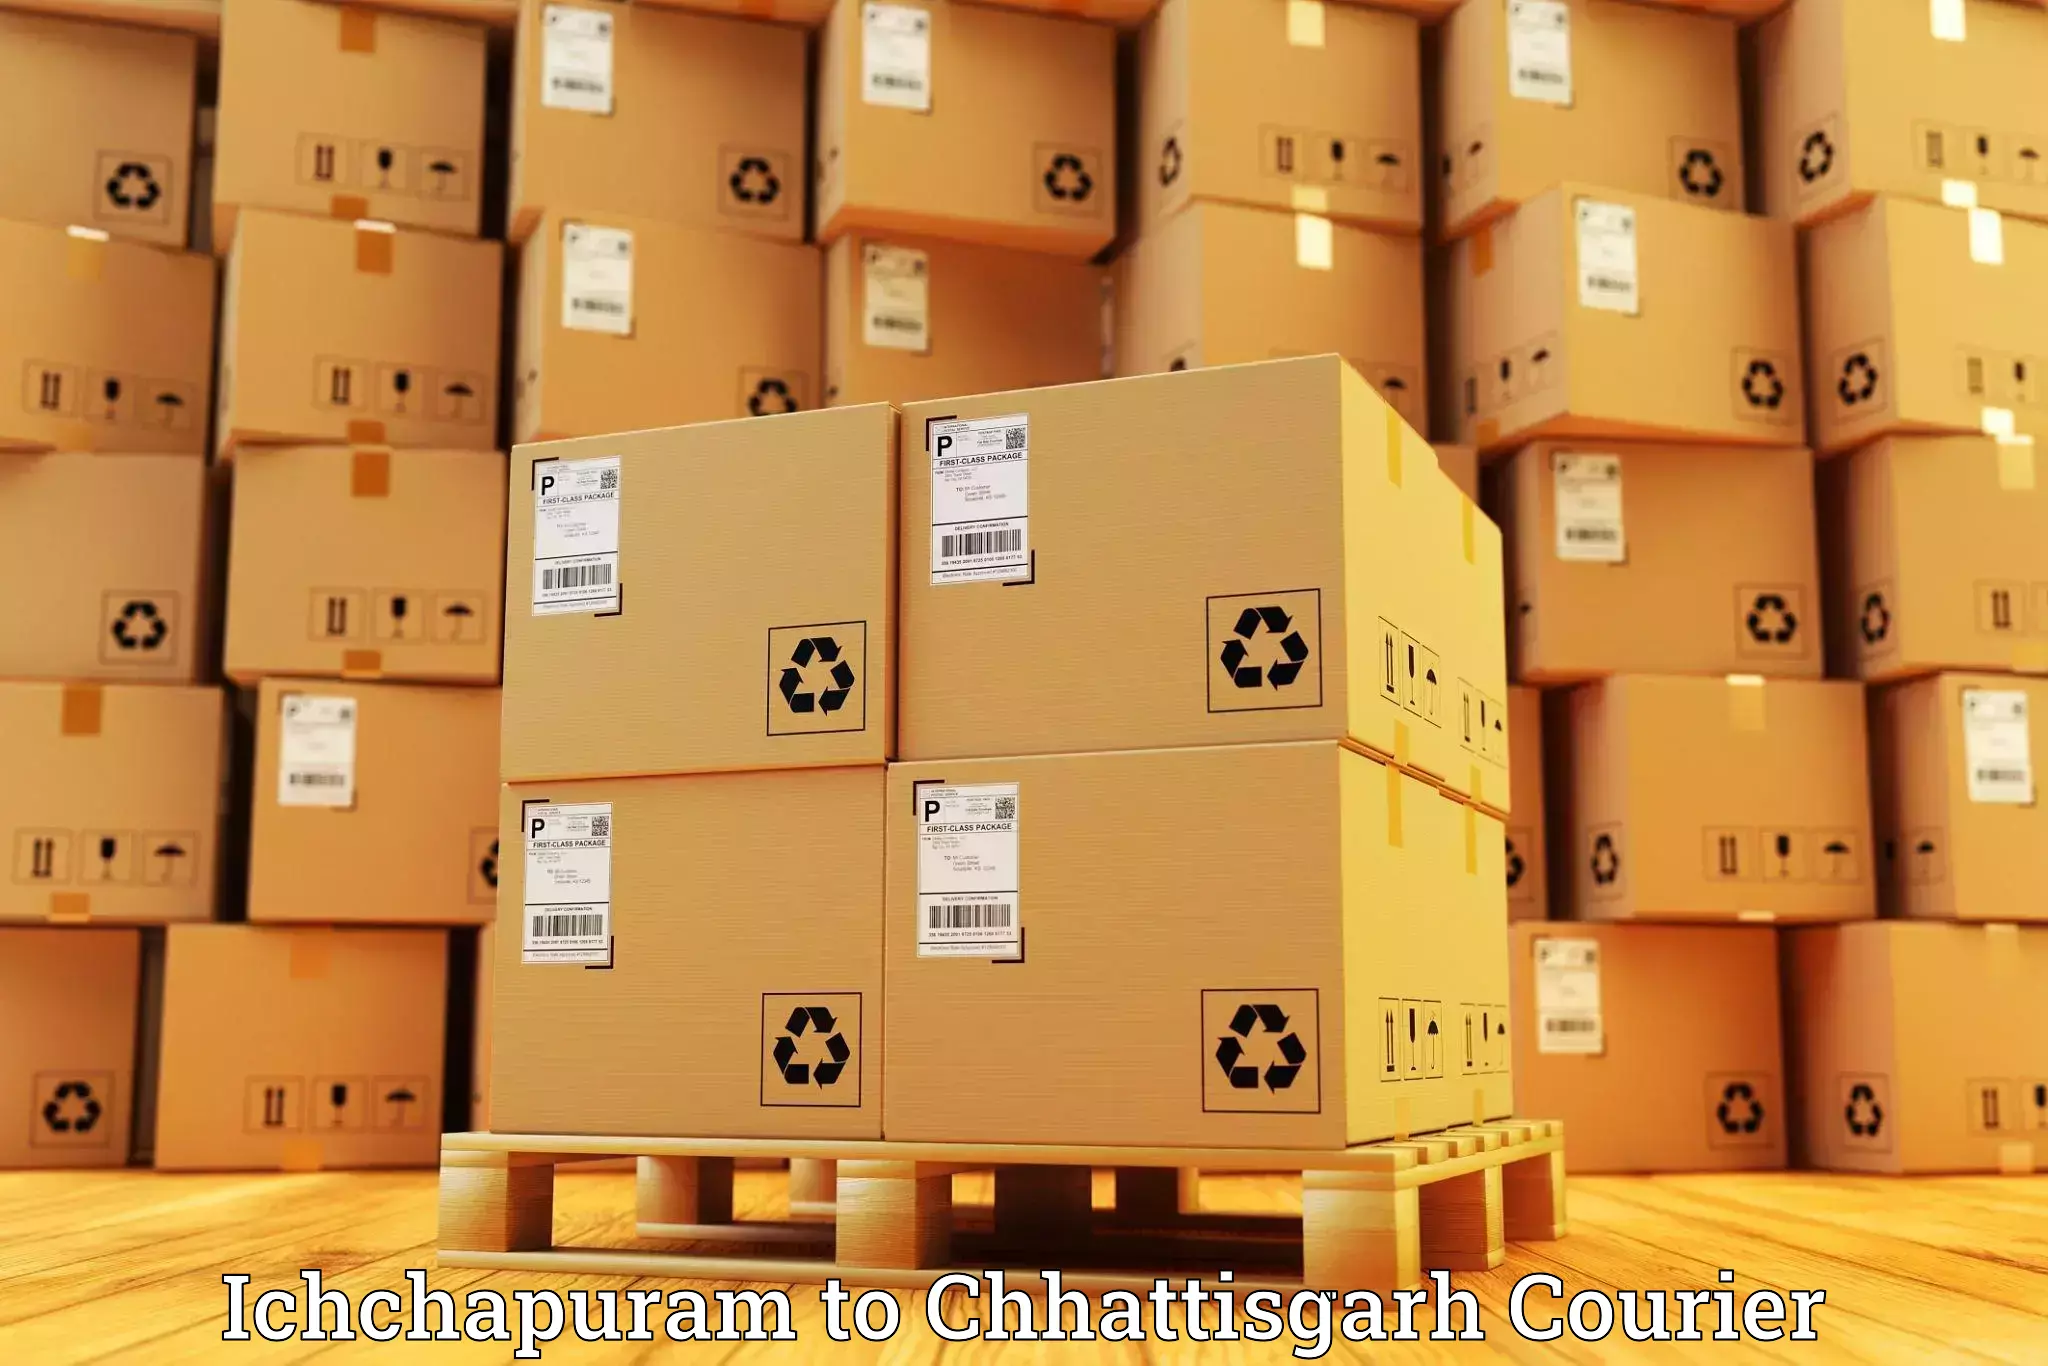 Express delivery capabilities in Ichchapuram to Chhattisgarh